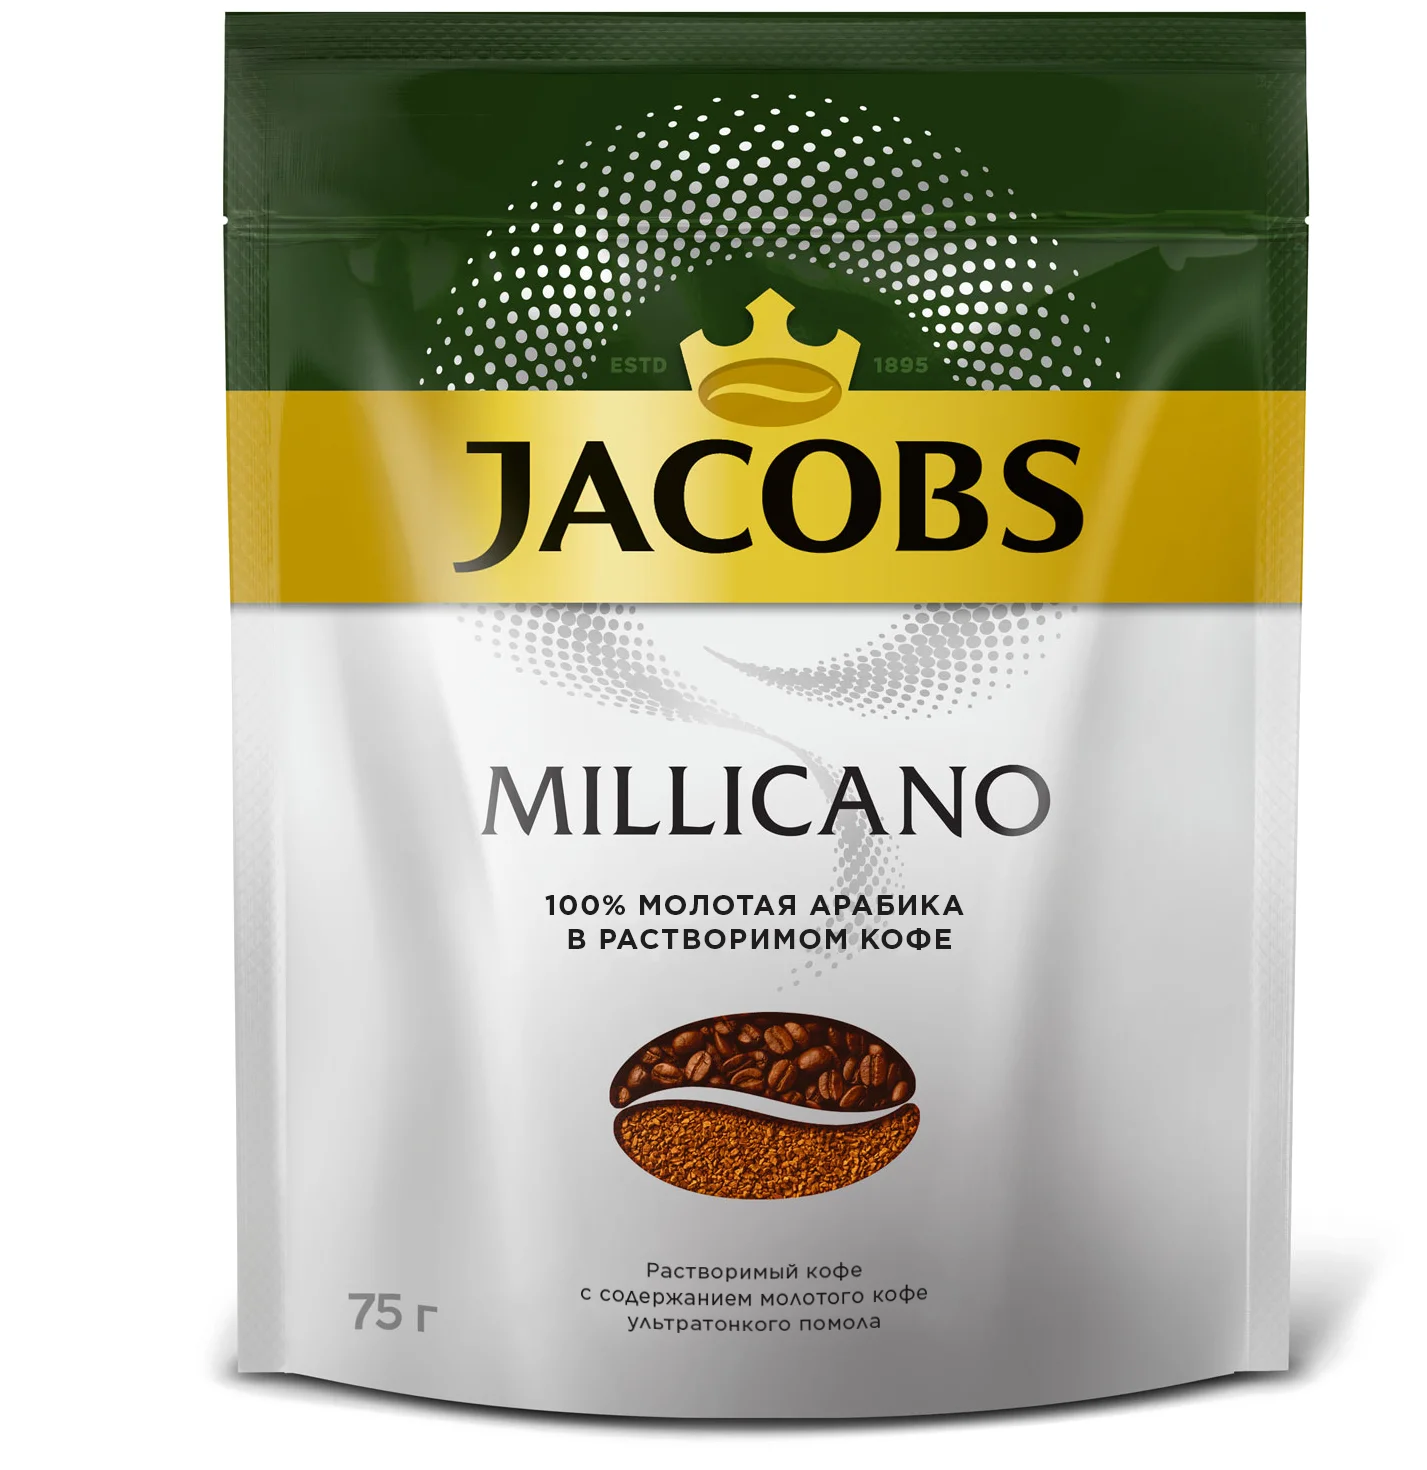 Jacobs "Millicano" - упаковка: мягкая упаковка